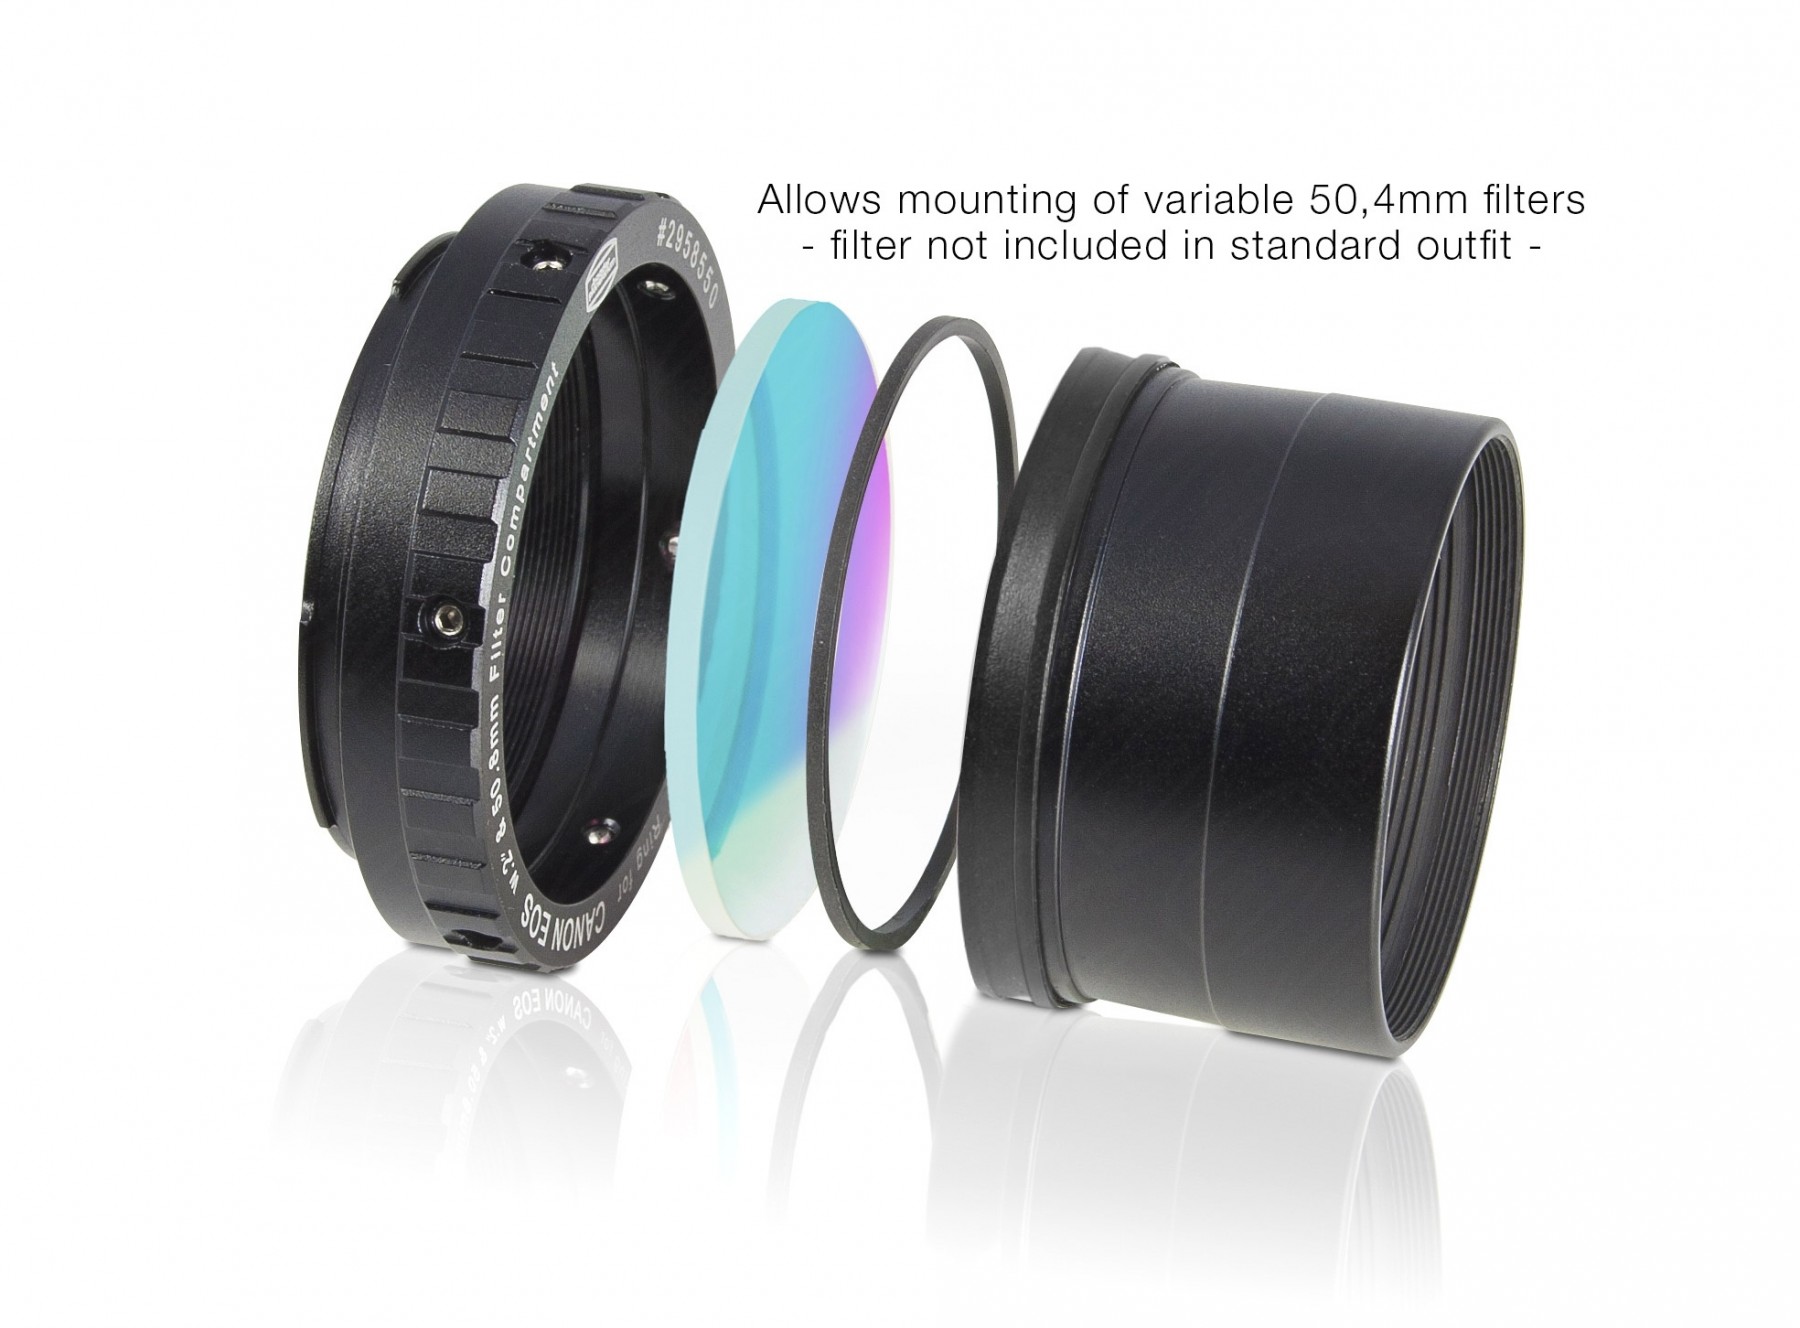 Baader T2-Ring kompatibel mit Canon EOS R/RP